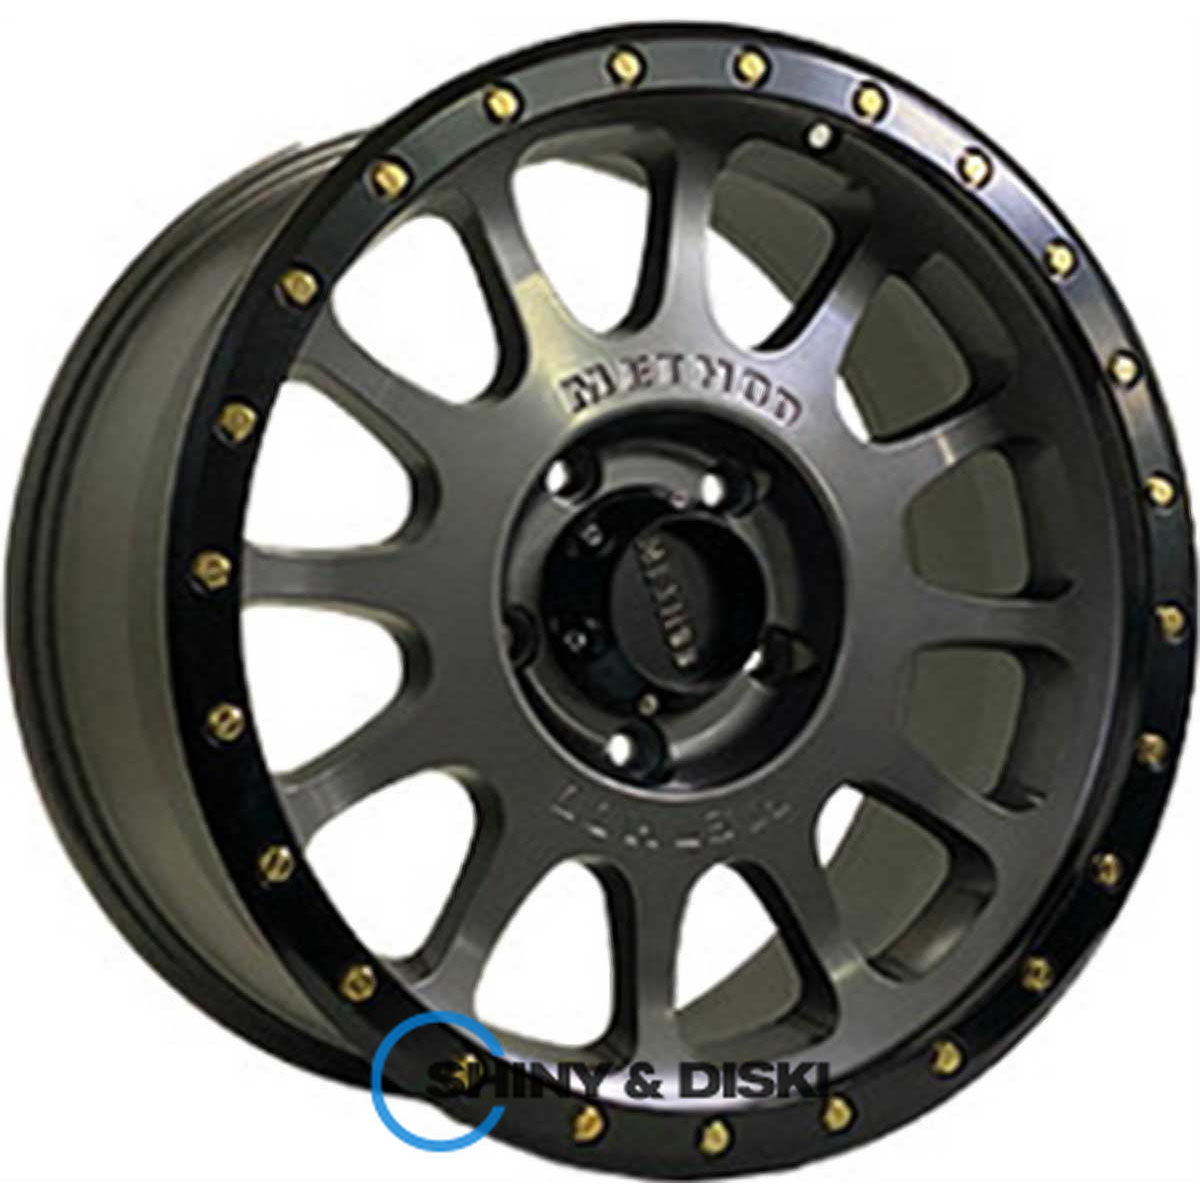 off road wheels ow9095 titanium with lip matt black r18 w9 pcd5x150 et0 dia110.5